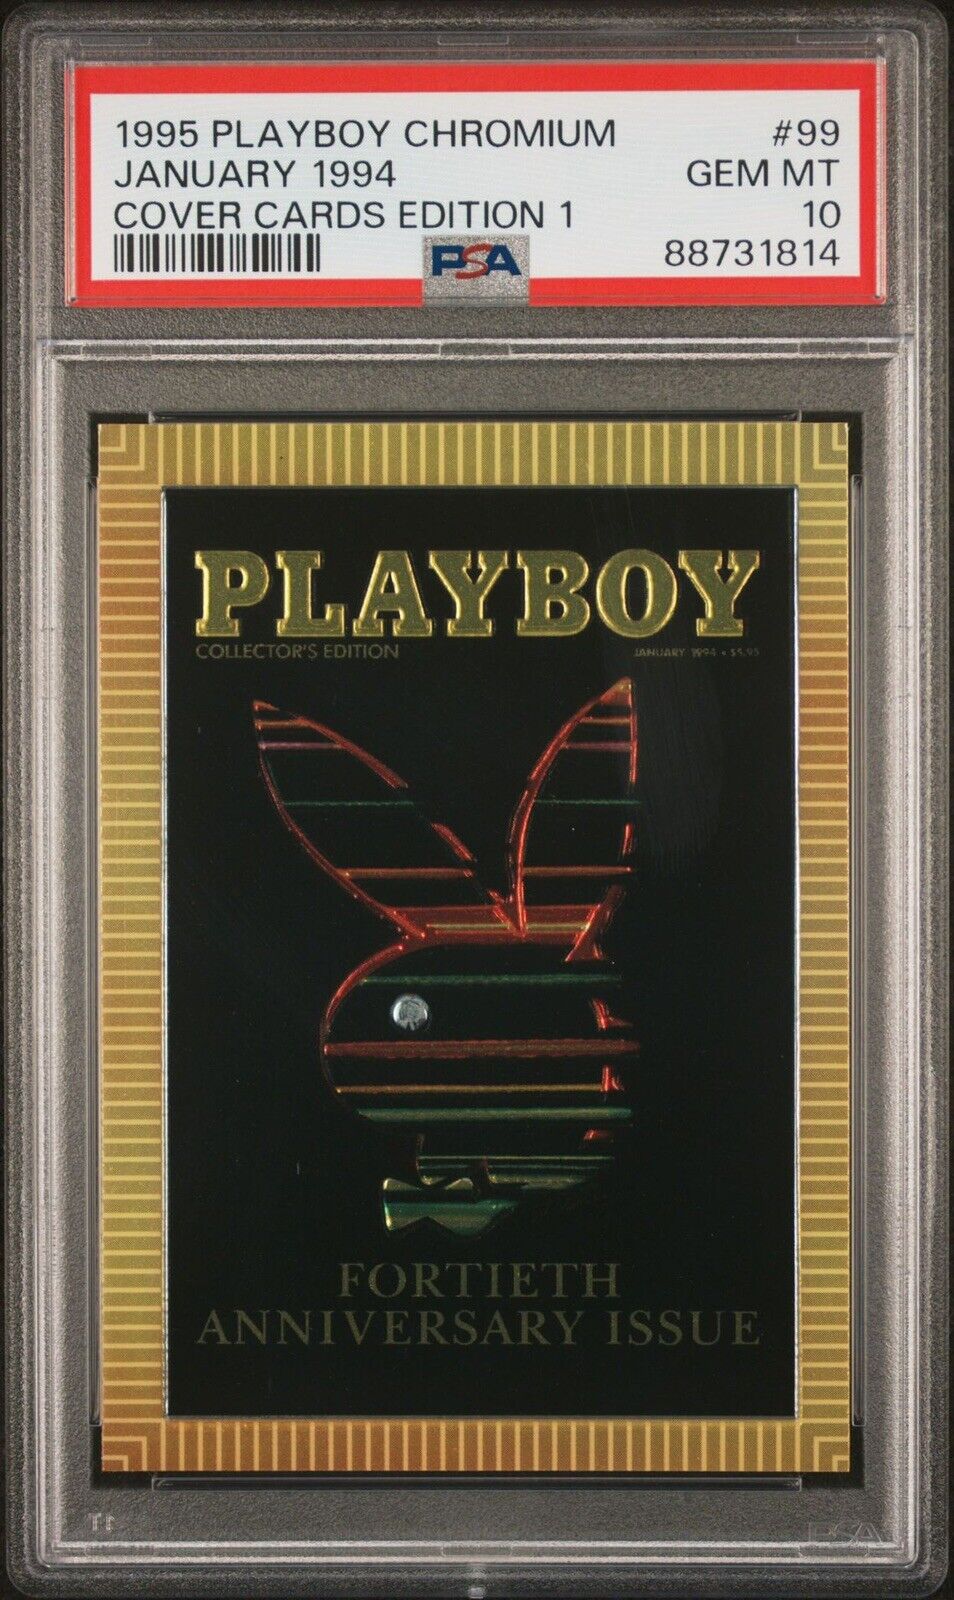 1995 Playboy Chromium Cover Cards Edition 1 99 January 1994 PSA Graded 10 🔥